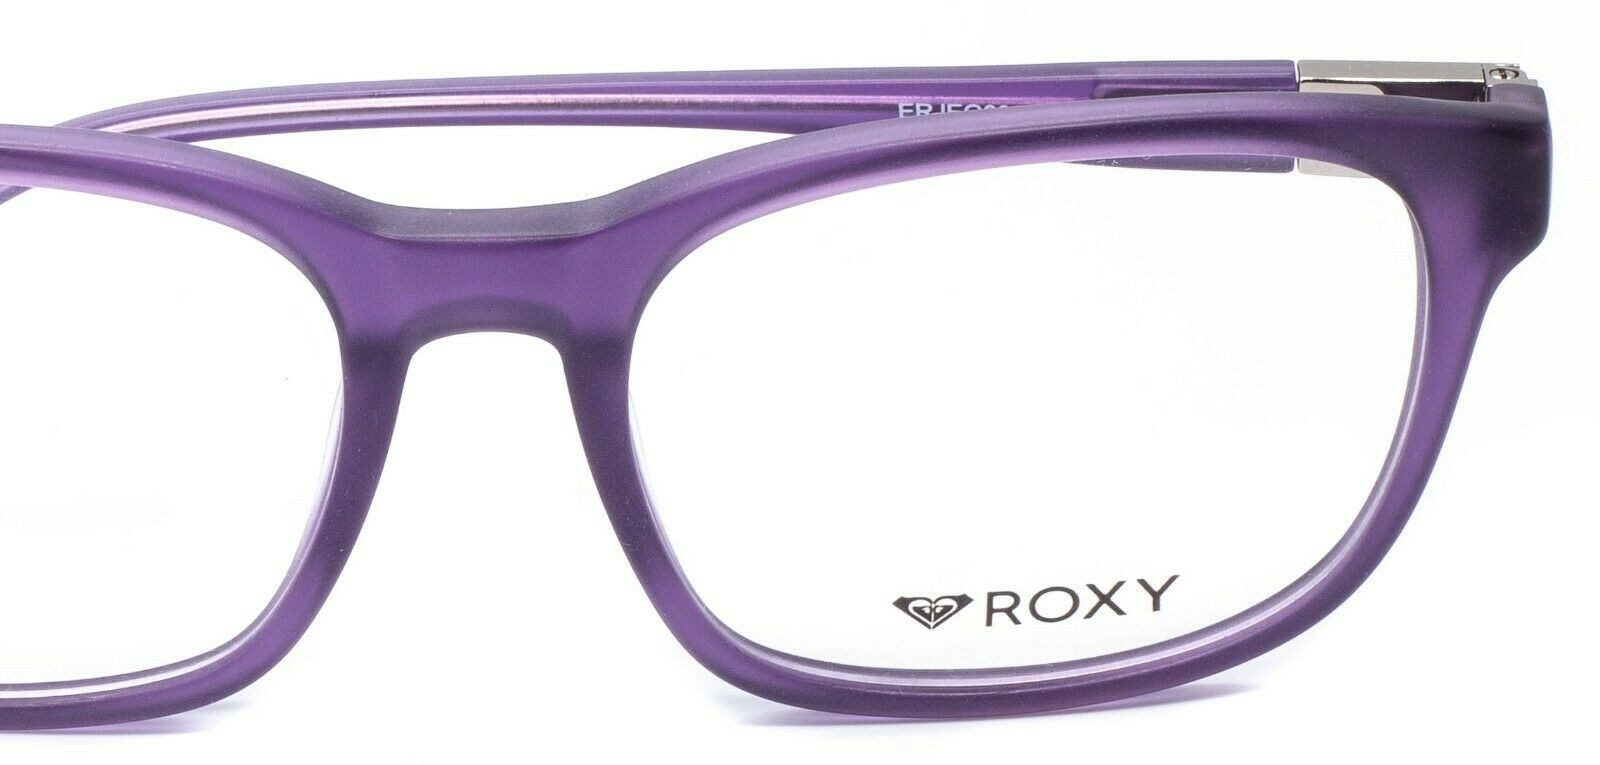 ROXY ISLA ERJEG03027/APUR 52mm Eyewear FRAMES Glasses RX Optical Eyeglasses New